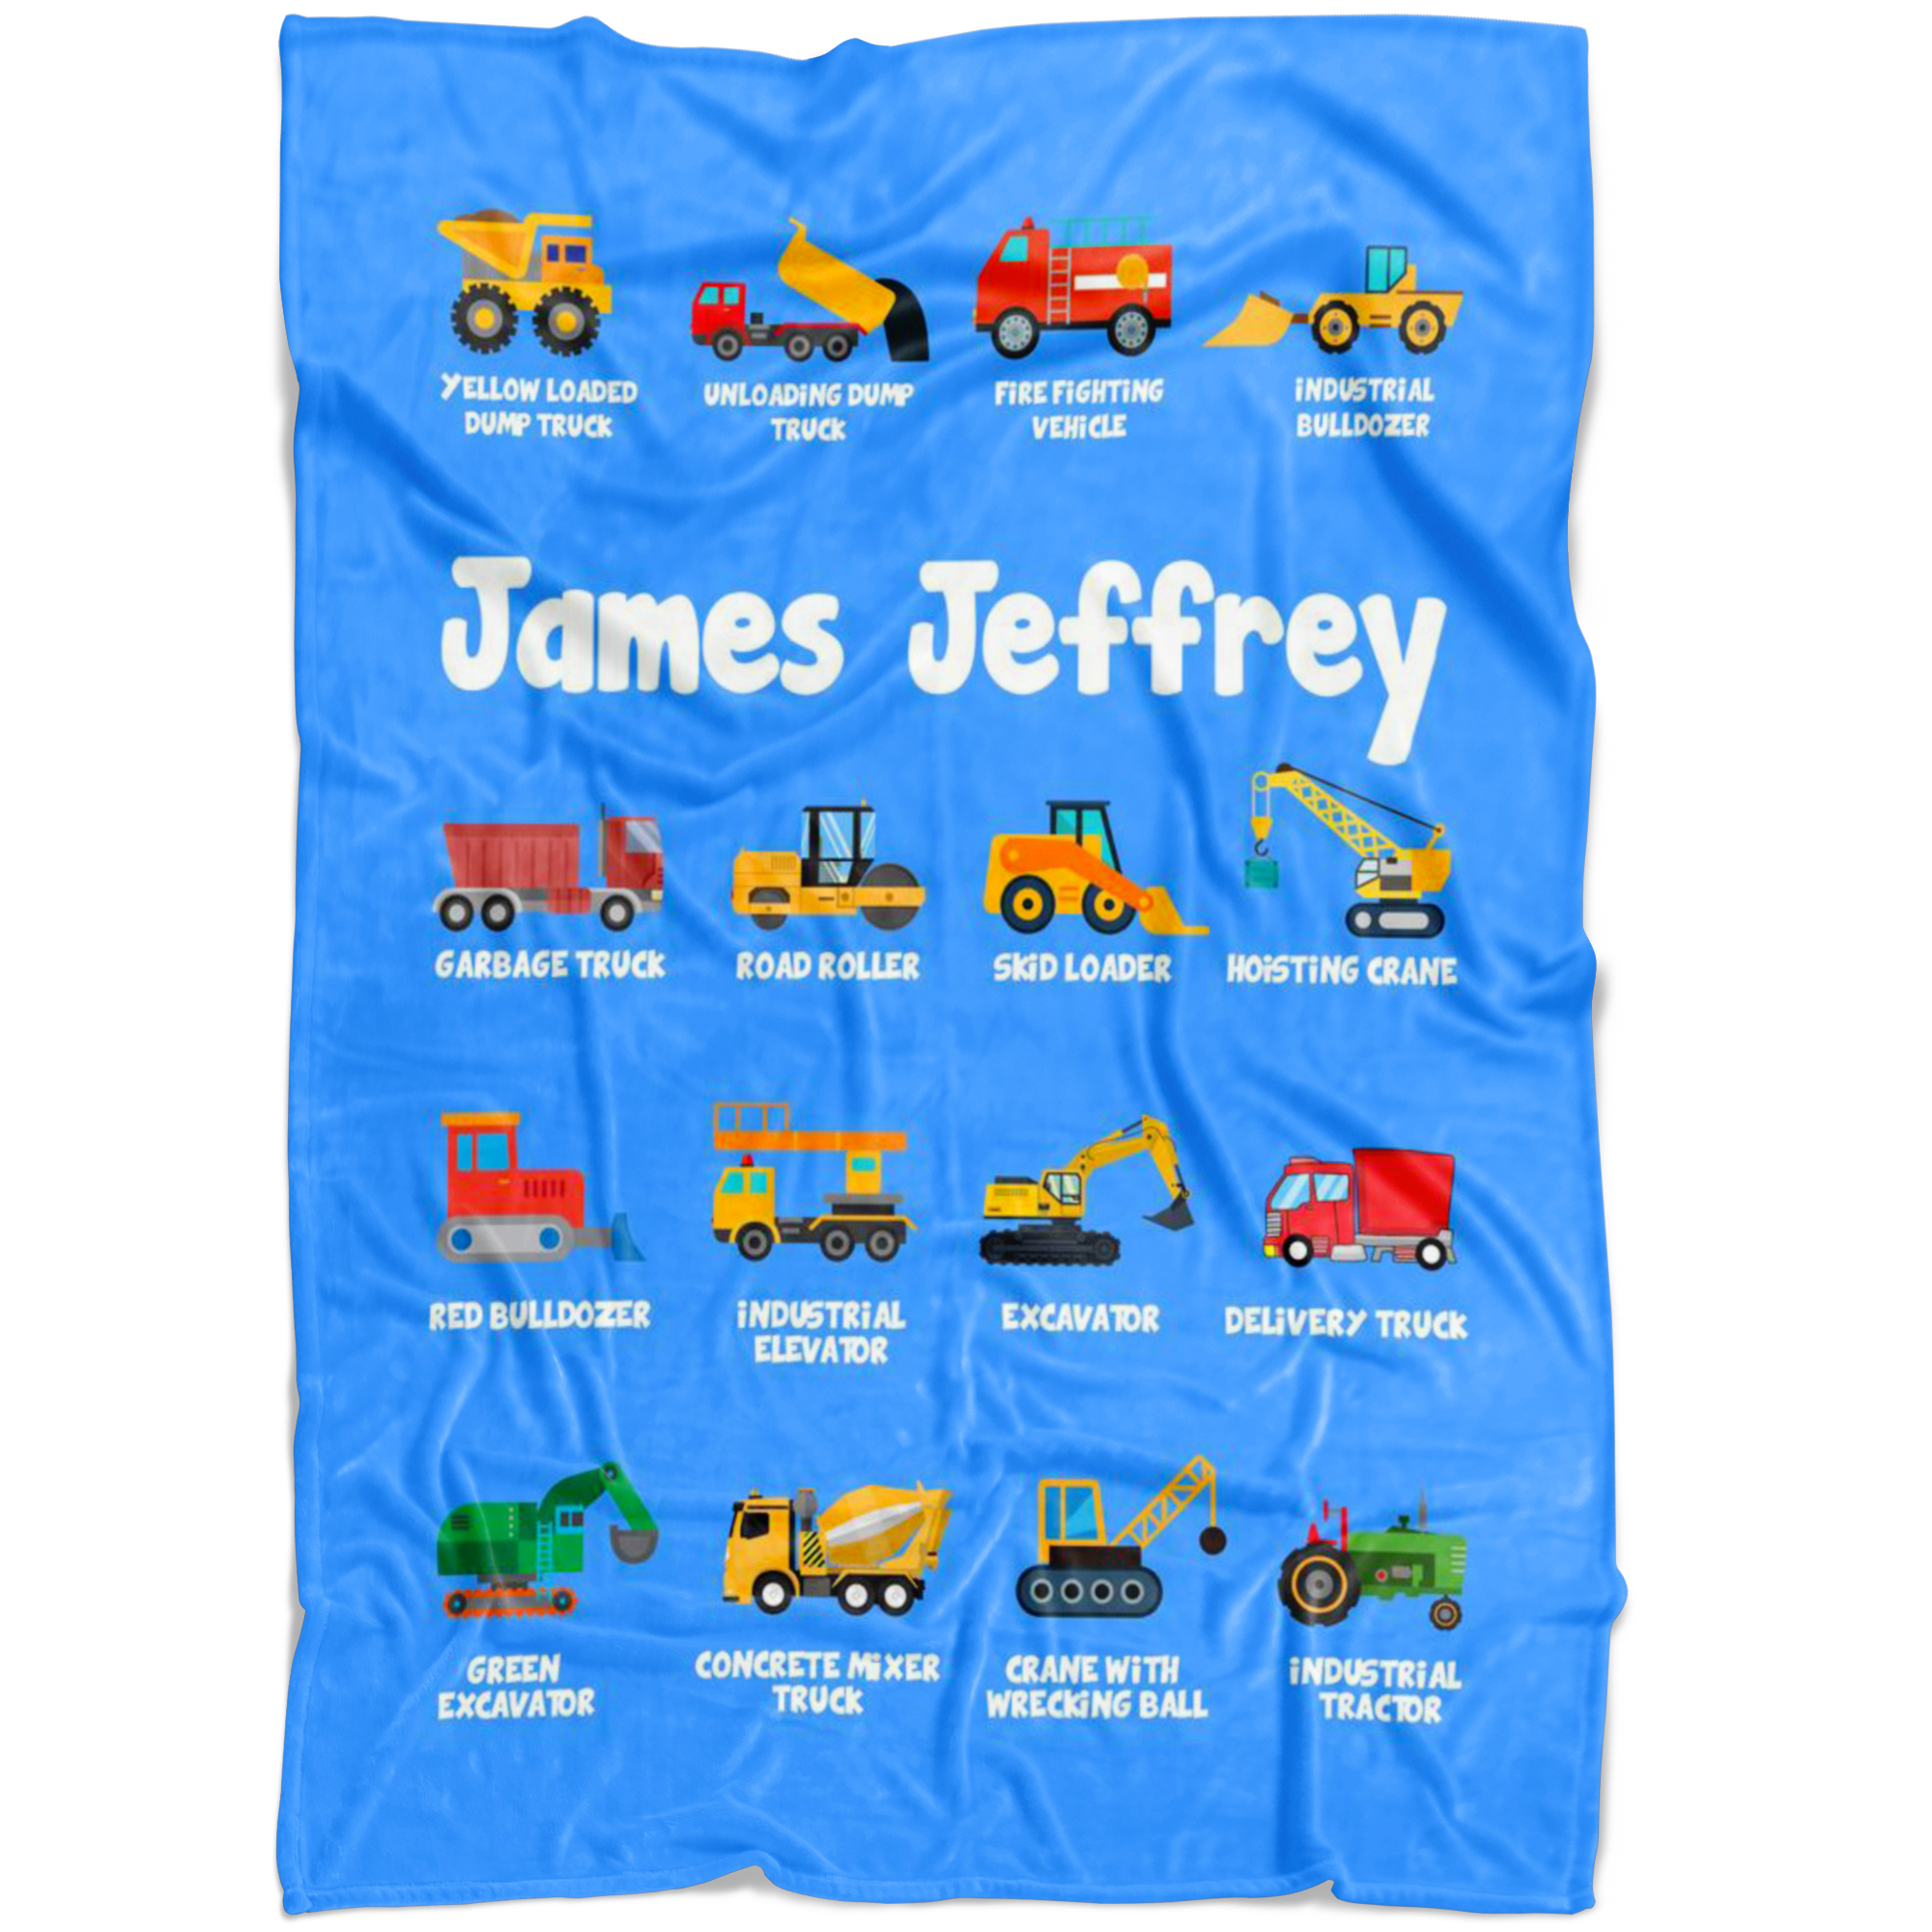 James Jeffrey Construction Blanket Blue